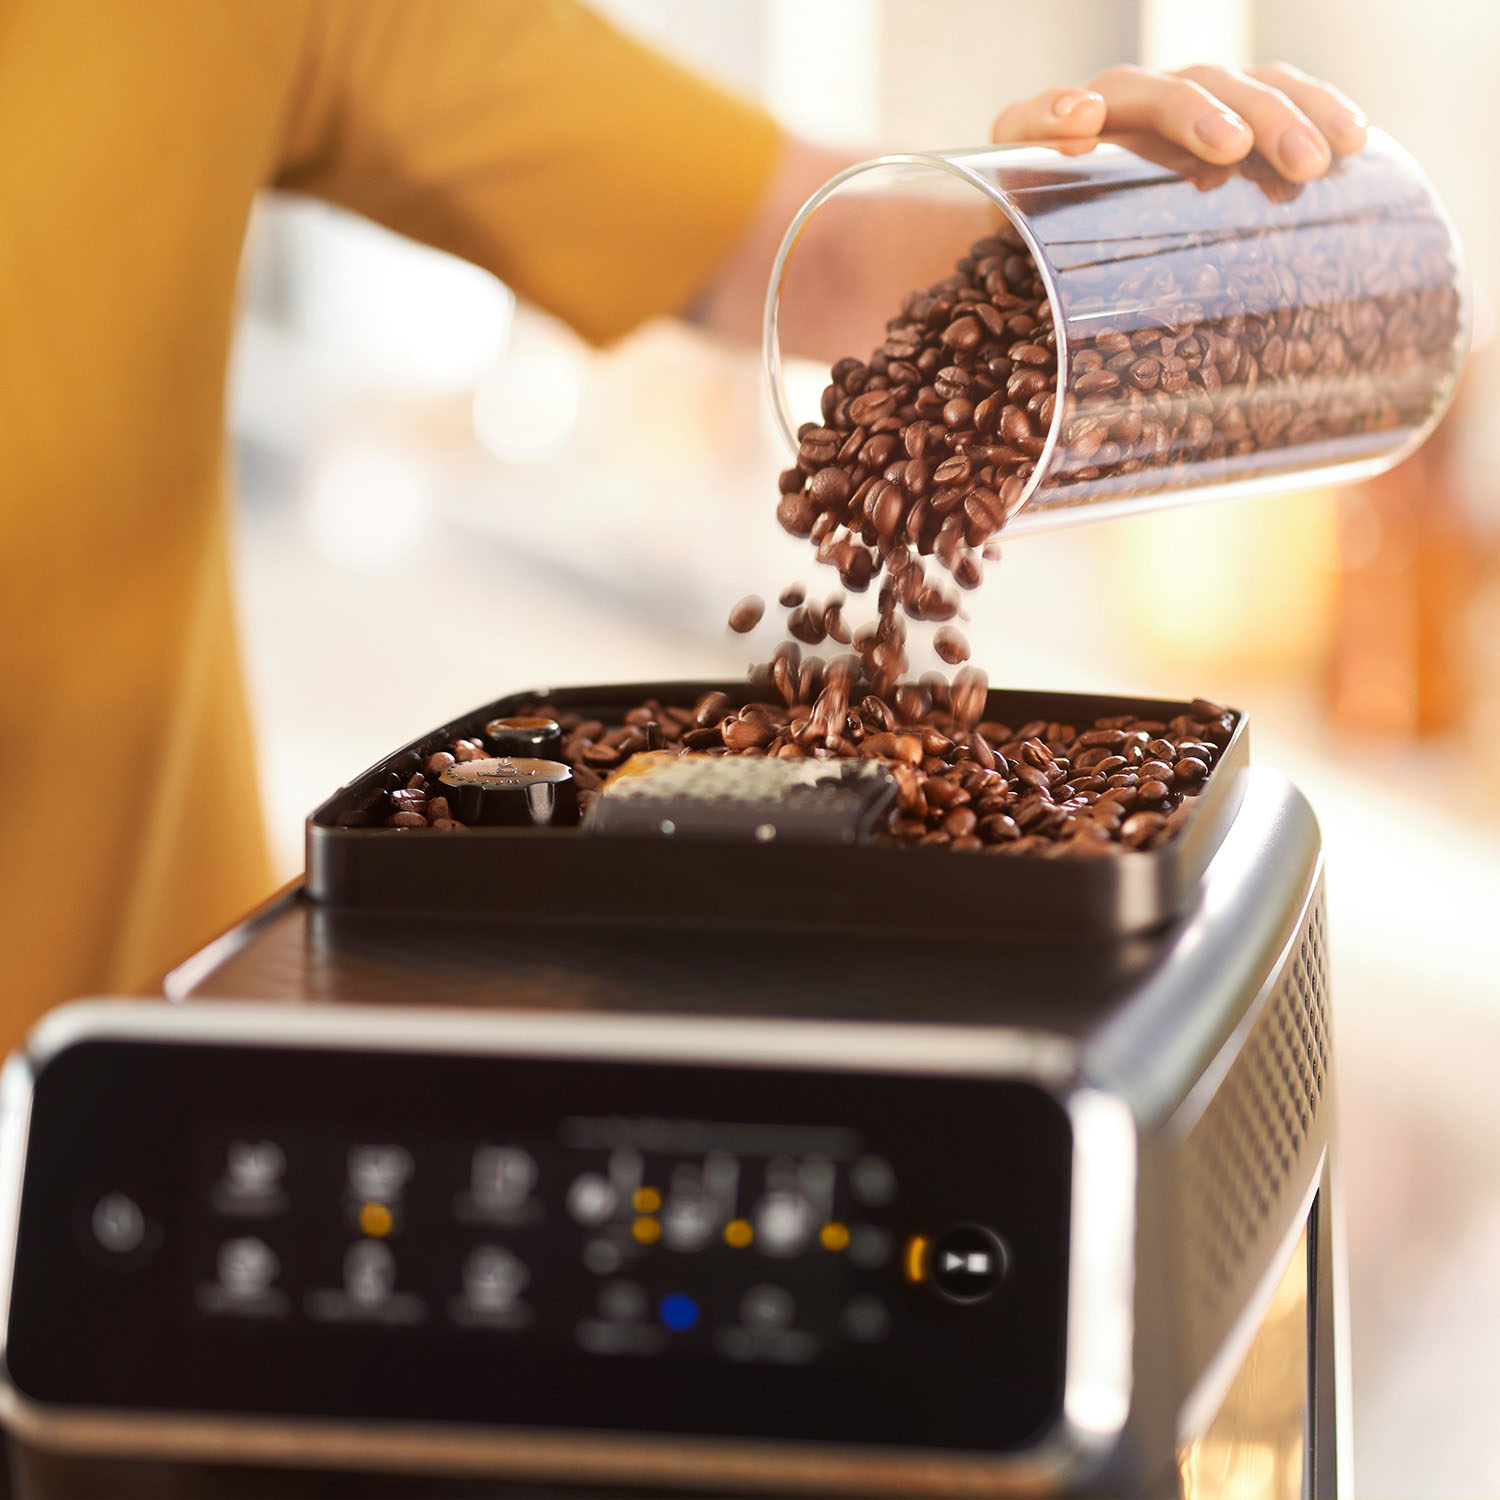 Philips 3200 LatteGo Iced Coffee Espresso Machine